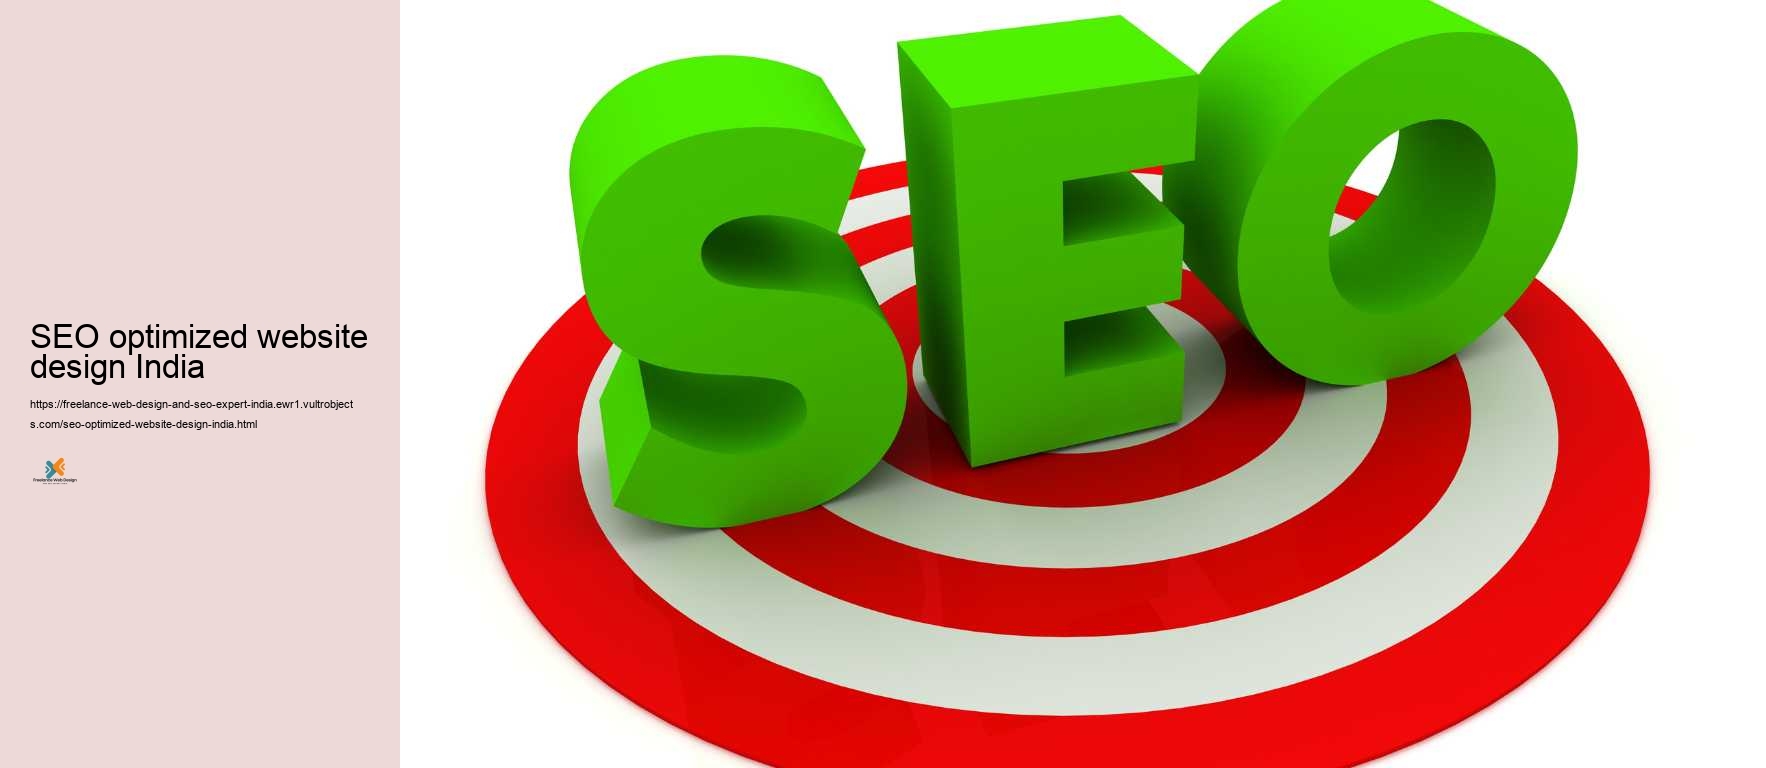 SEO optimized website design India